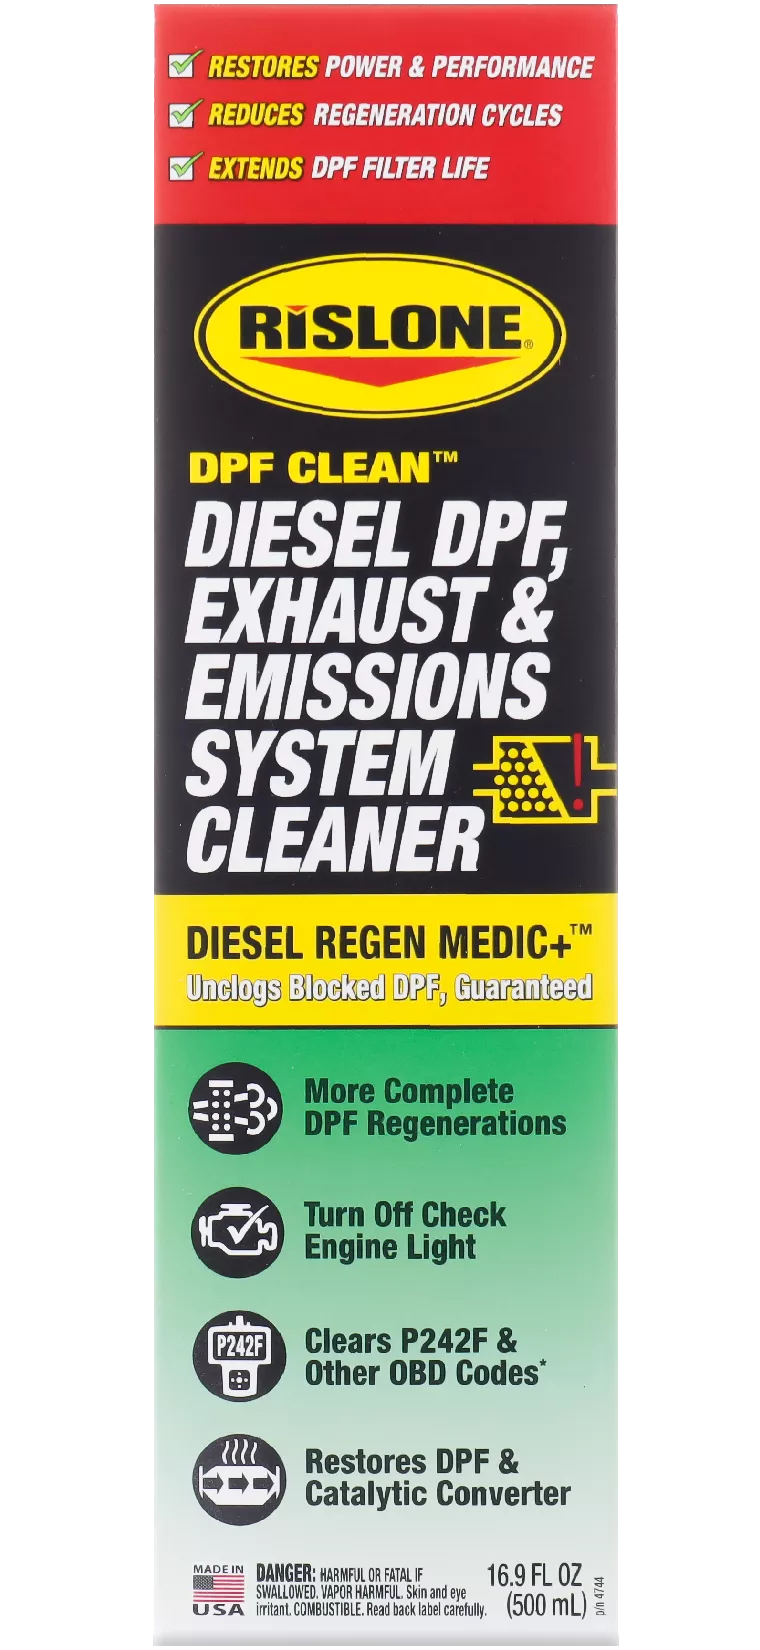 DPF restor', Particulate filter cleaner